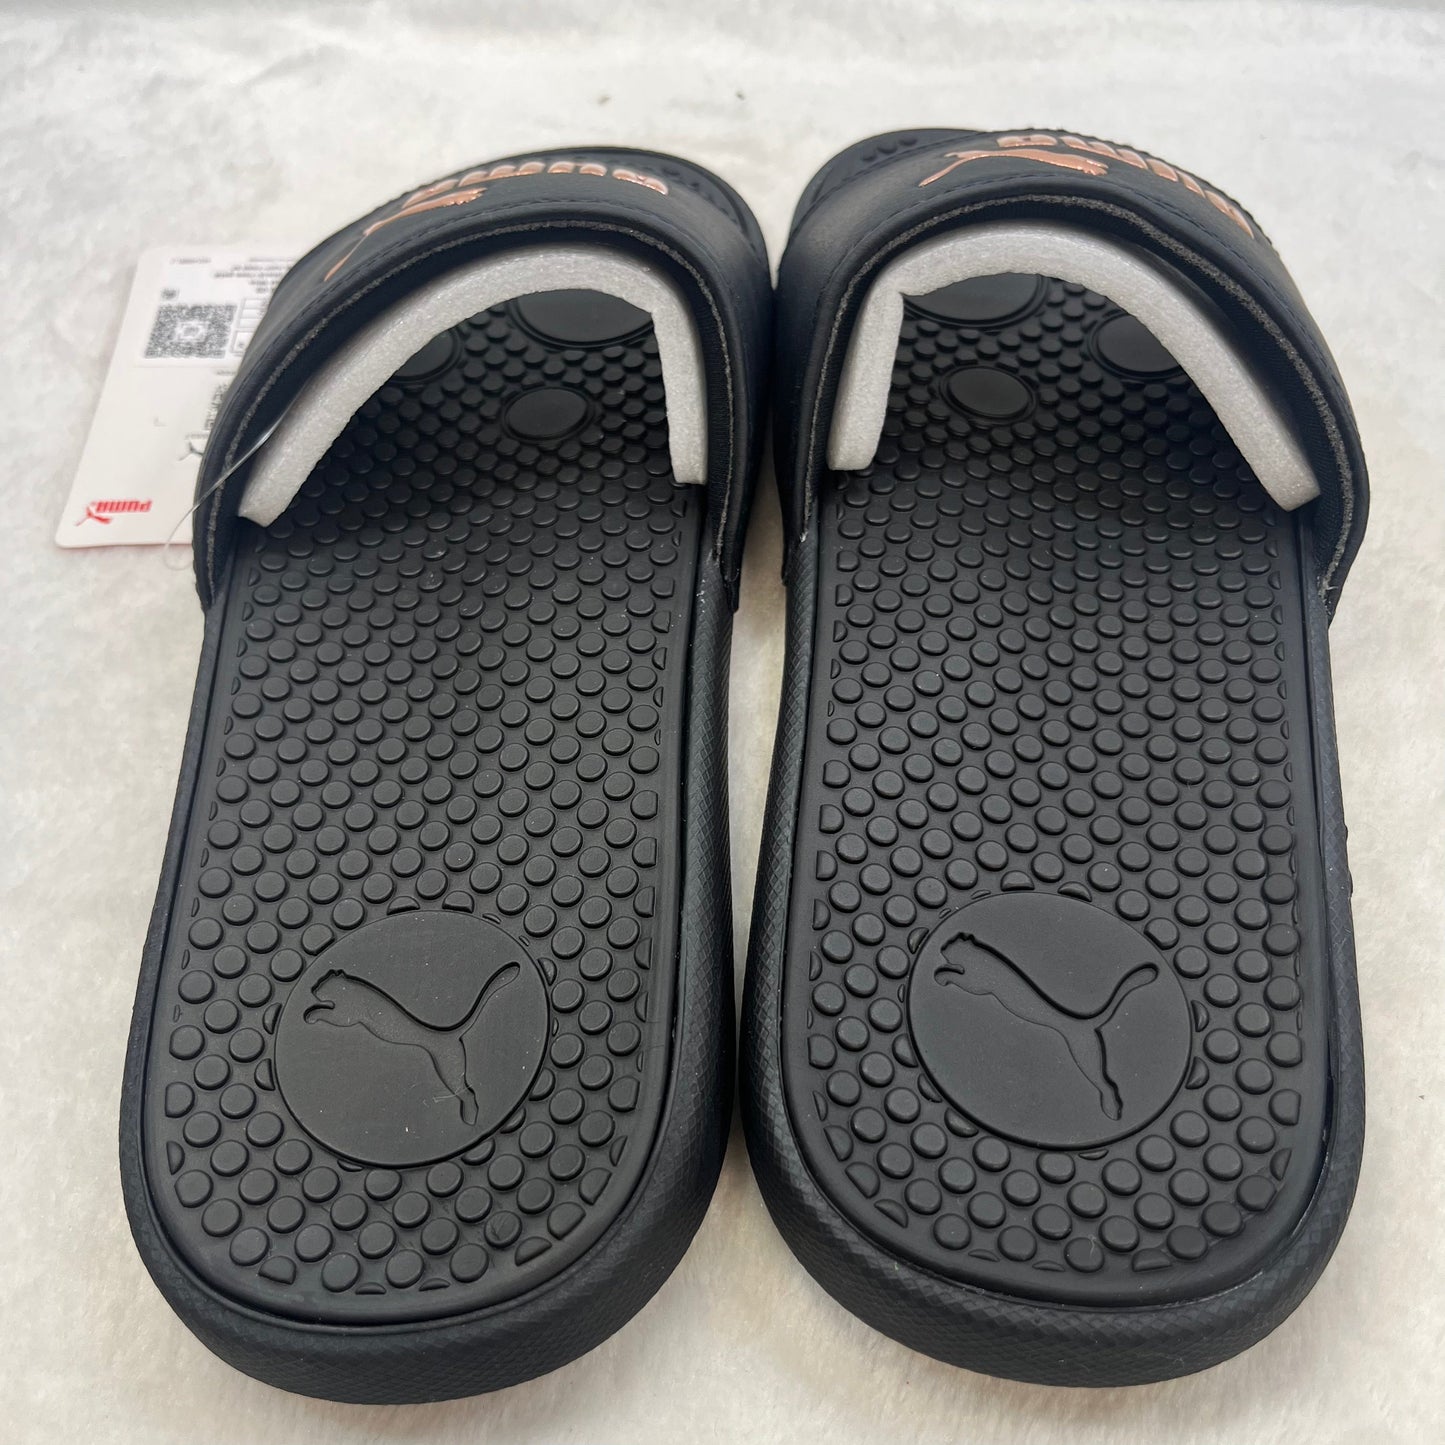 Sandals Flats By Puma  Size: 10